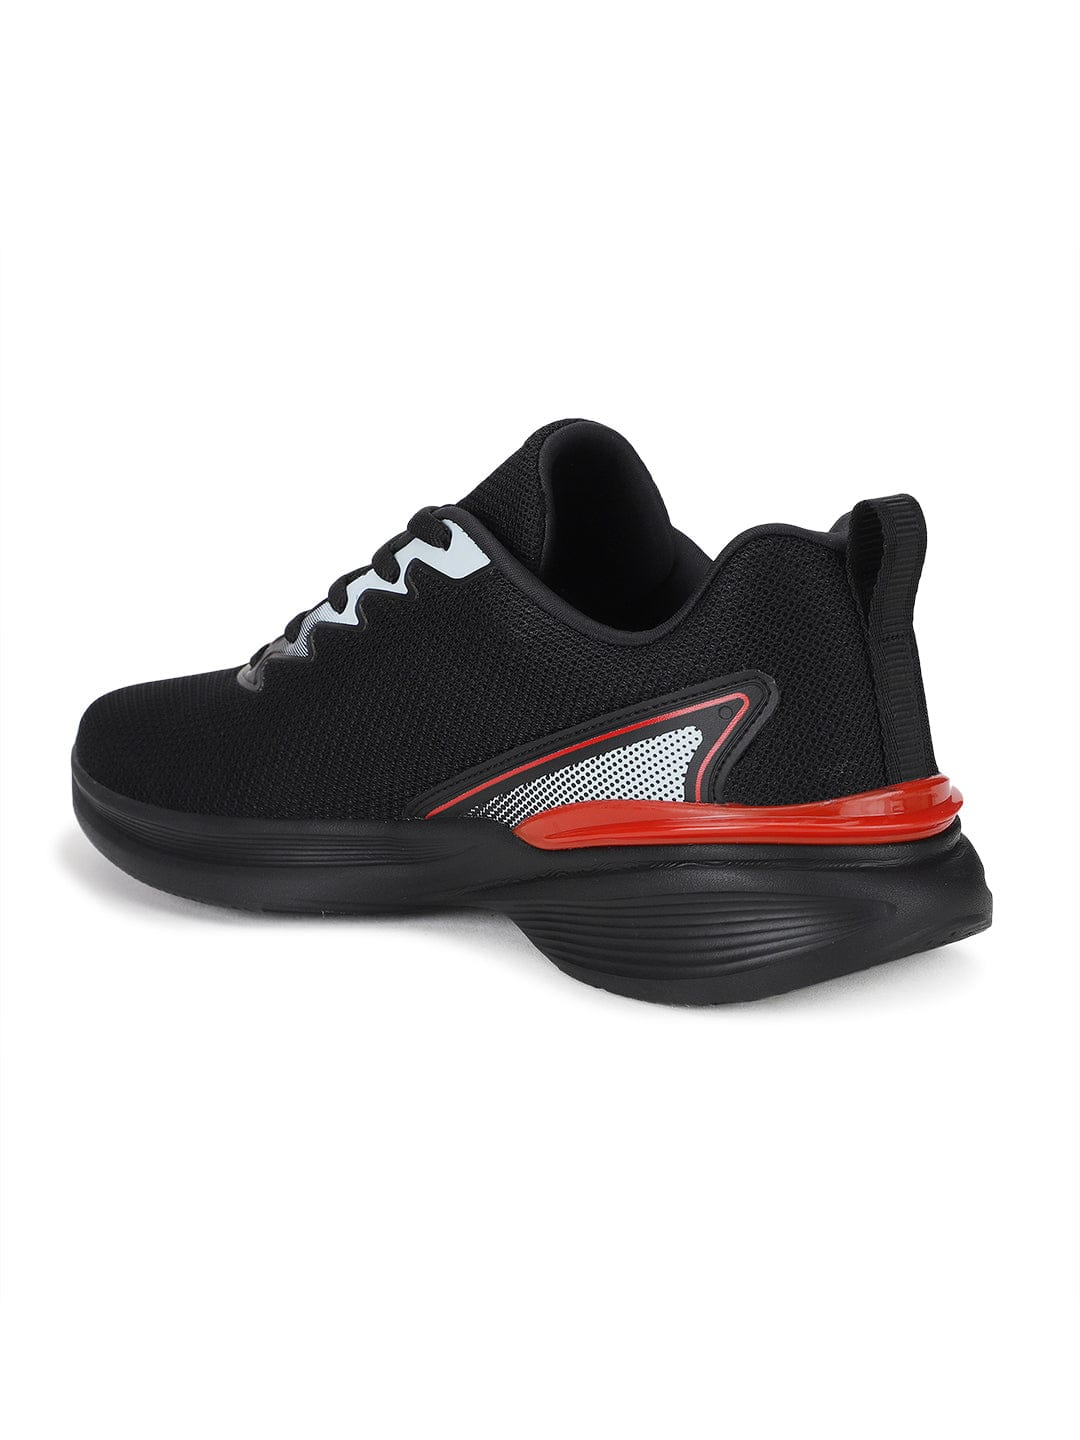 Buy SEBSTAIN Black Men's Sports Shoes online | Campus Shoes